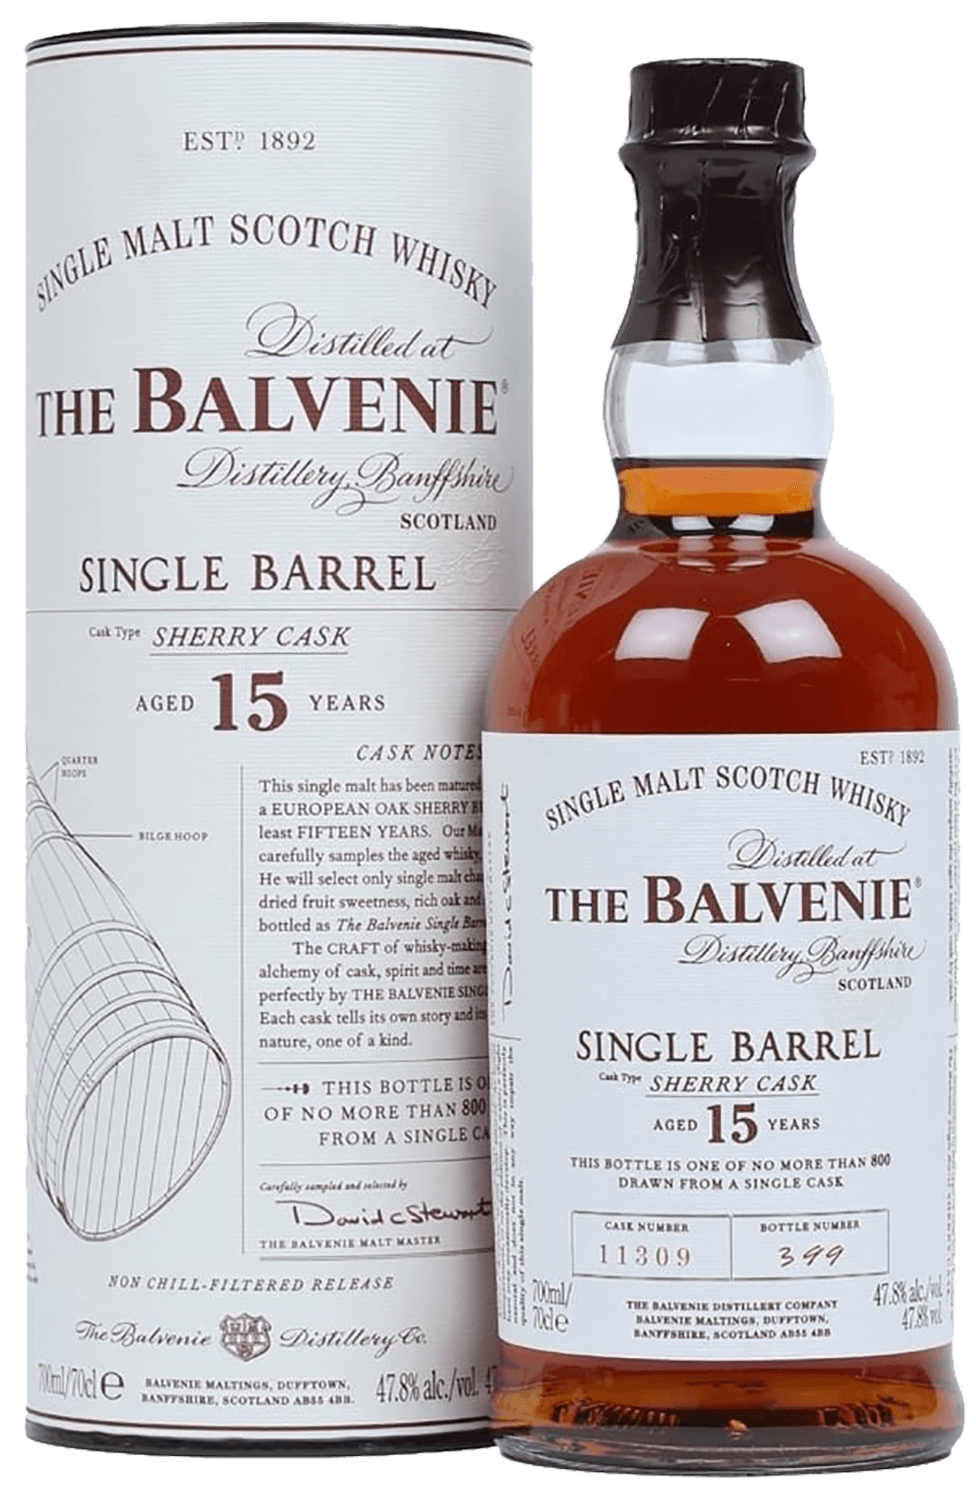 The Balvenie Single Barrel Sherry Cask 15 Years Old Single Malt Scotch Whisky (gift box) the balvenie 40 y o single malt scotch whisky gift box